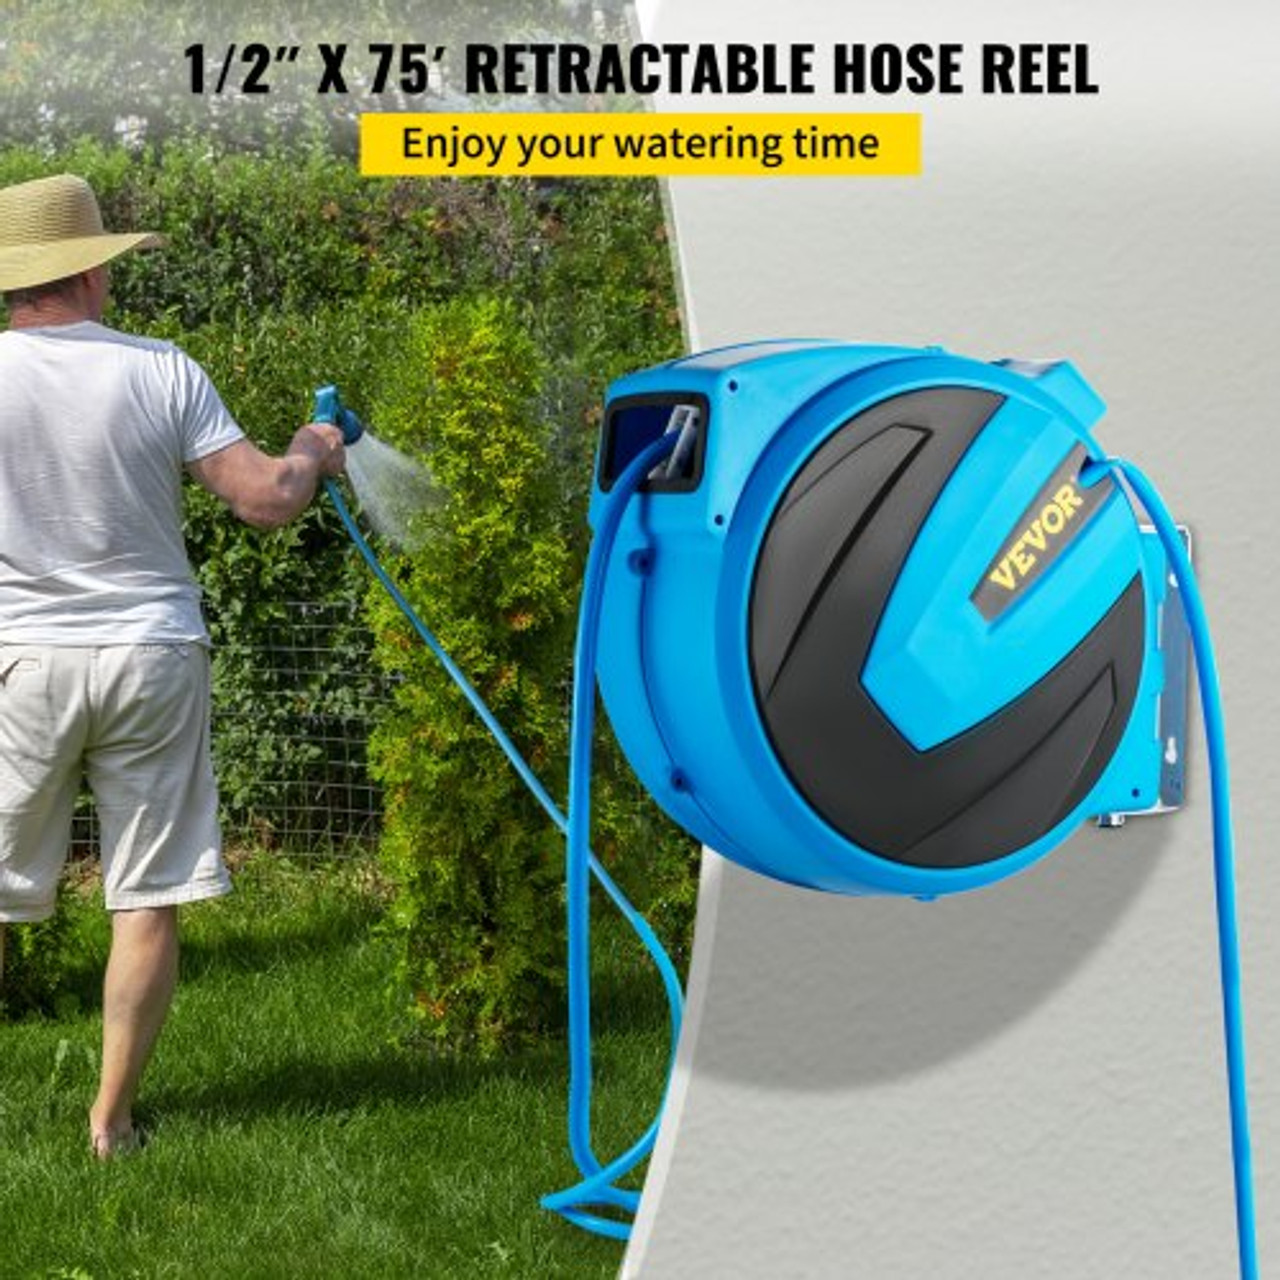 VEVOR Retractable Hose Reel, 1/2 inch x 75 ft, Any Length Lock & Automatic Rewind Water Hose, Wall Mounted Garden Hose Reel w/ 180° Swivel Bracket